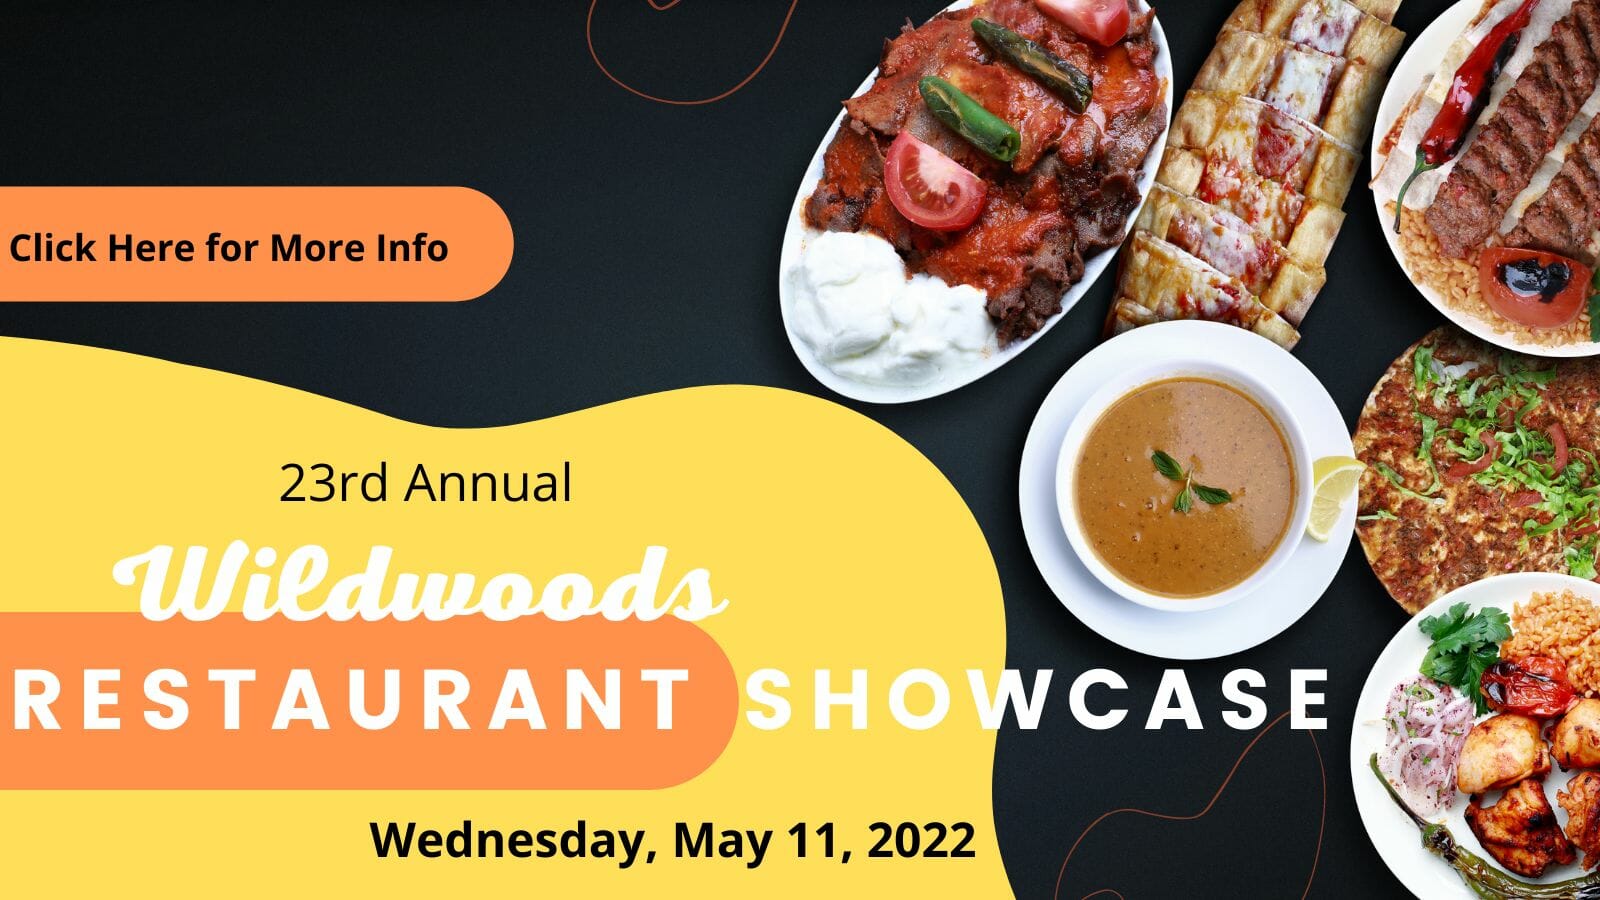 Wildwoods Restaurant Showcase